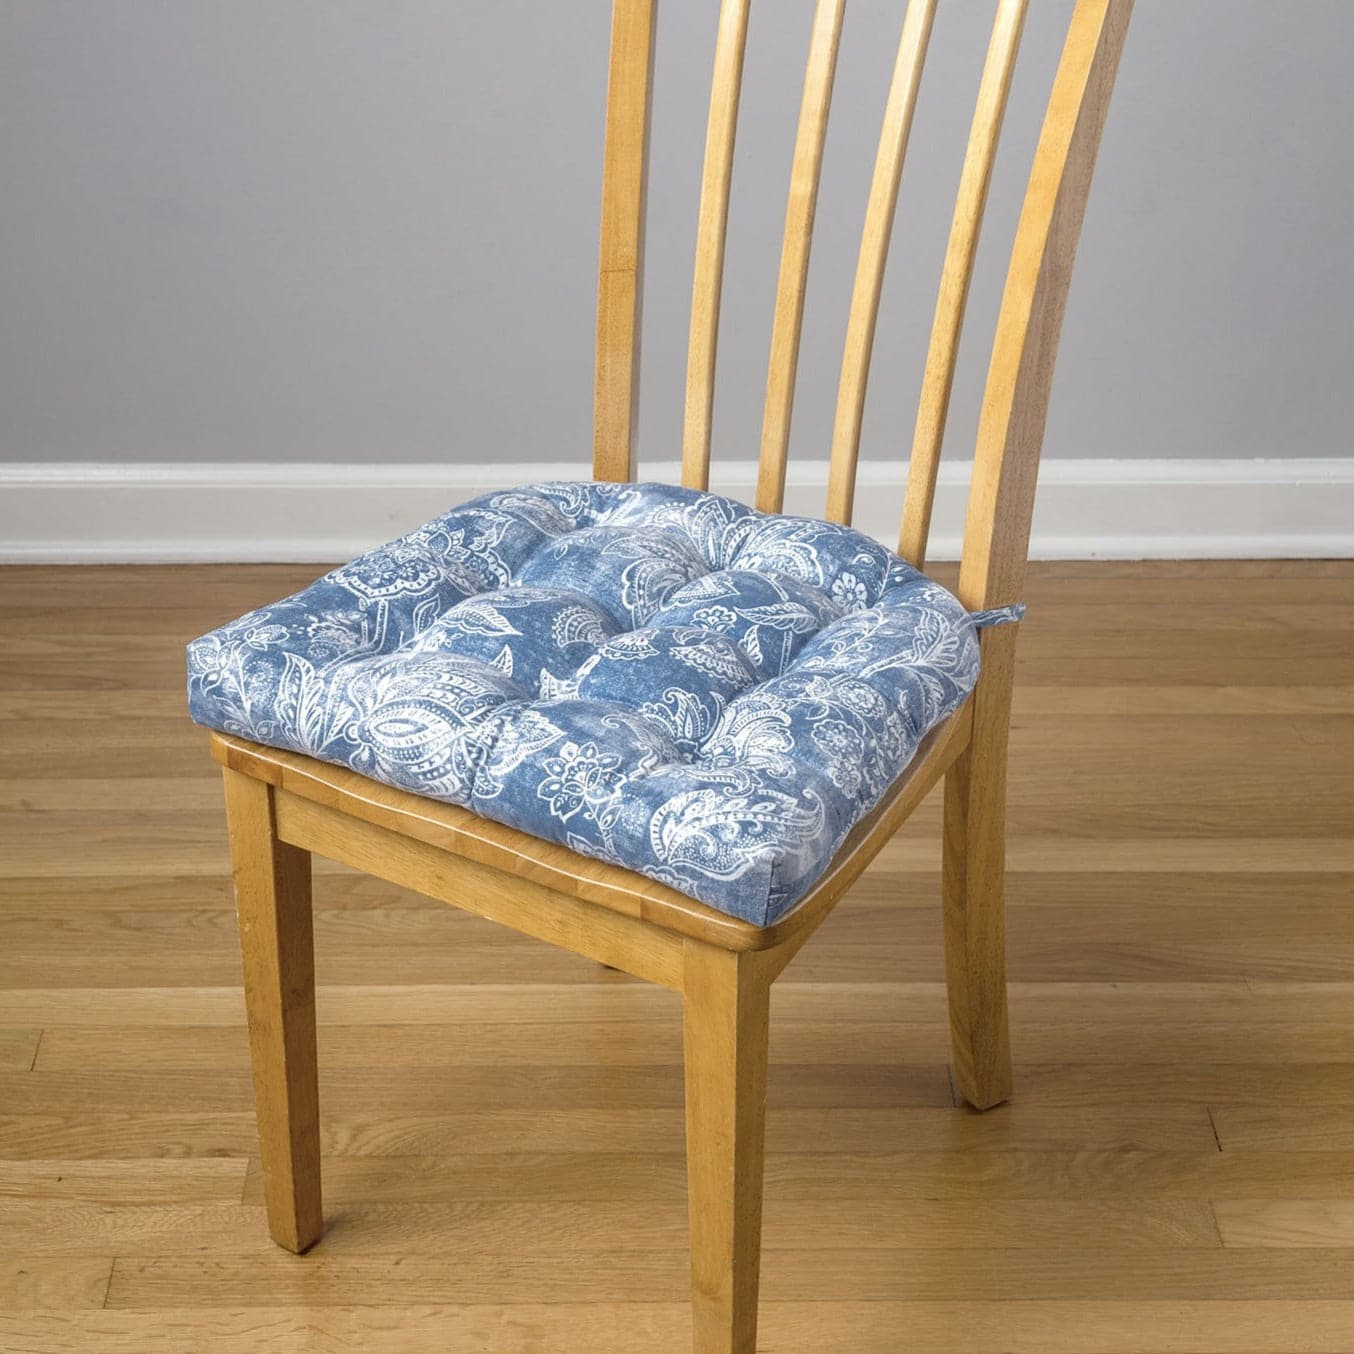 Williamsburg Blue Dining Chair Pads - Barnett Home Decor - Blue & White